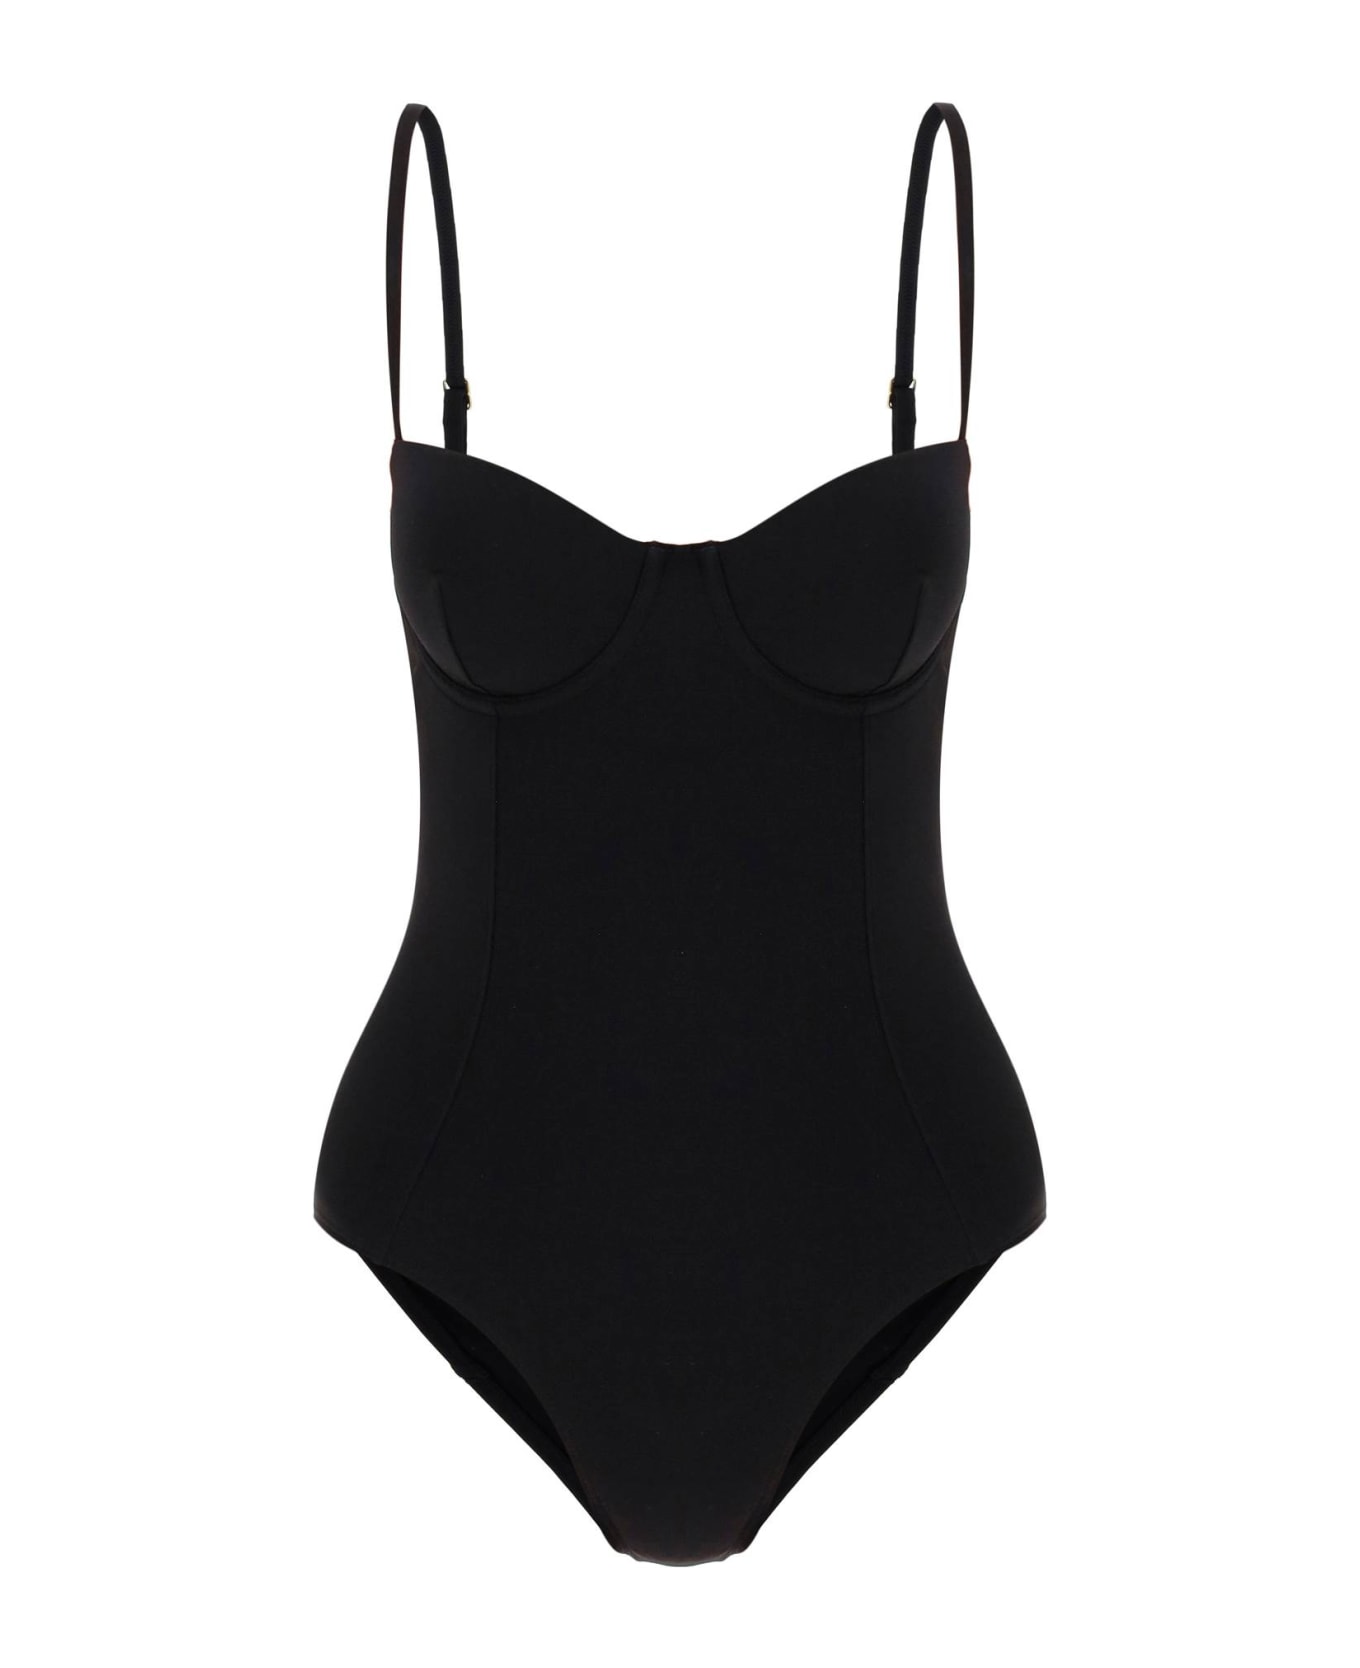 Tory Burch One-piece Swimsuit - BLACK (Black)